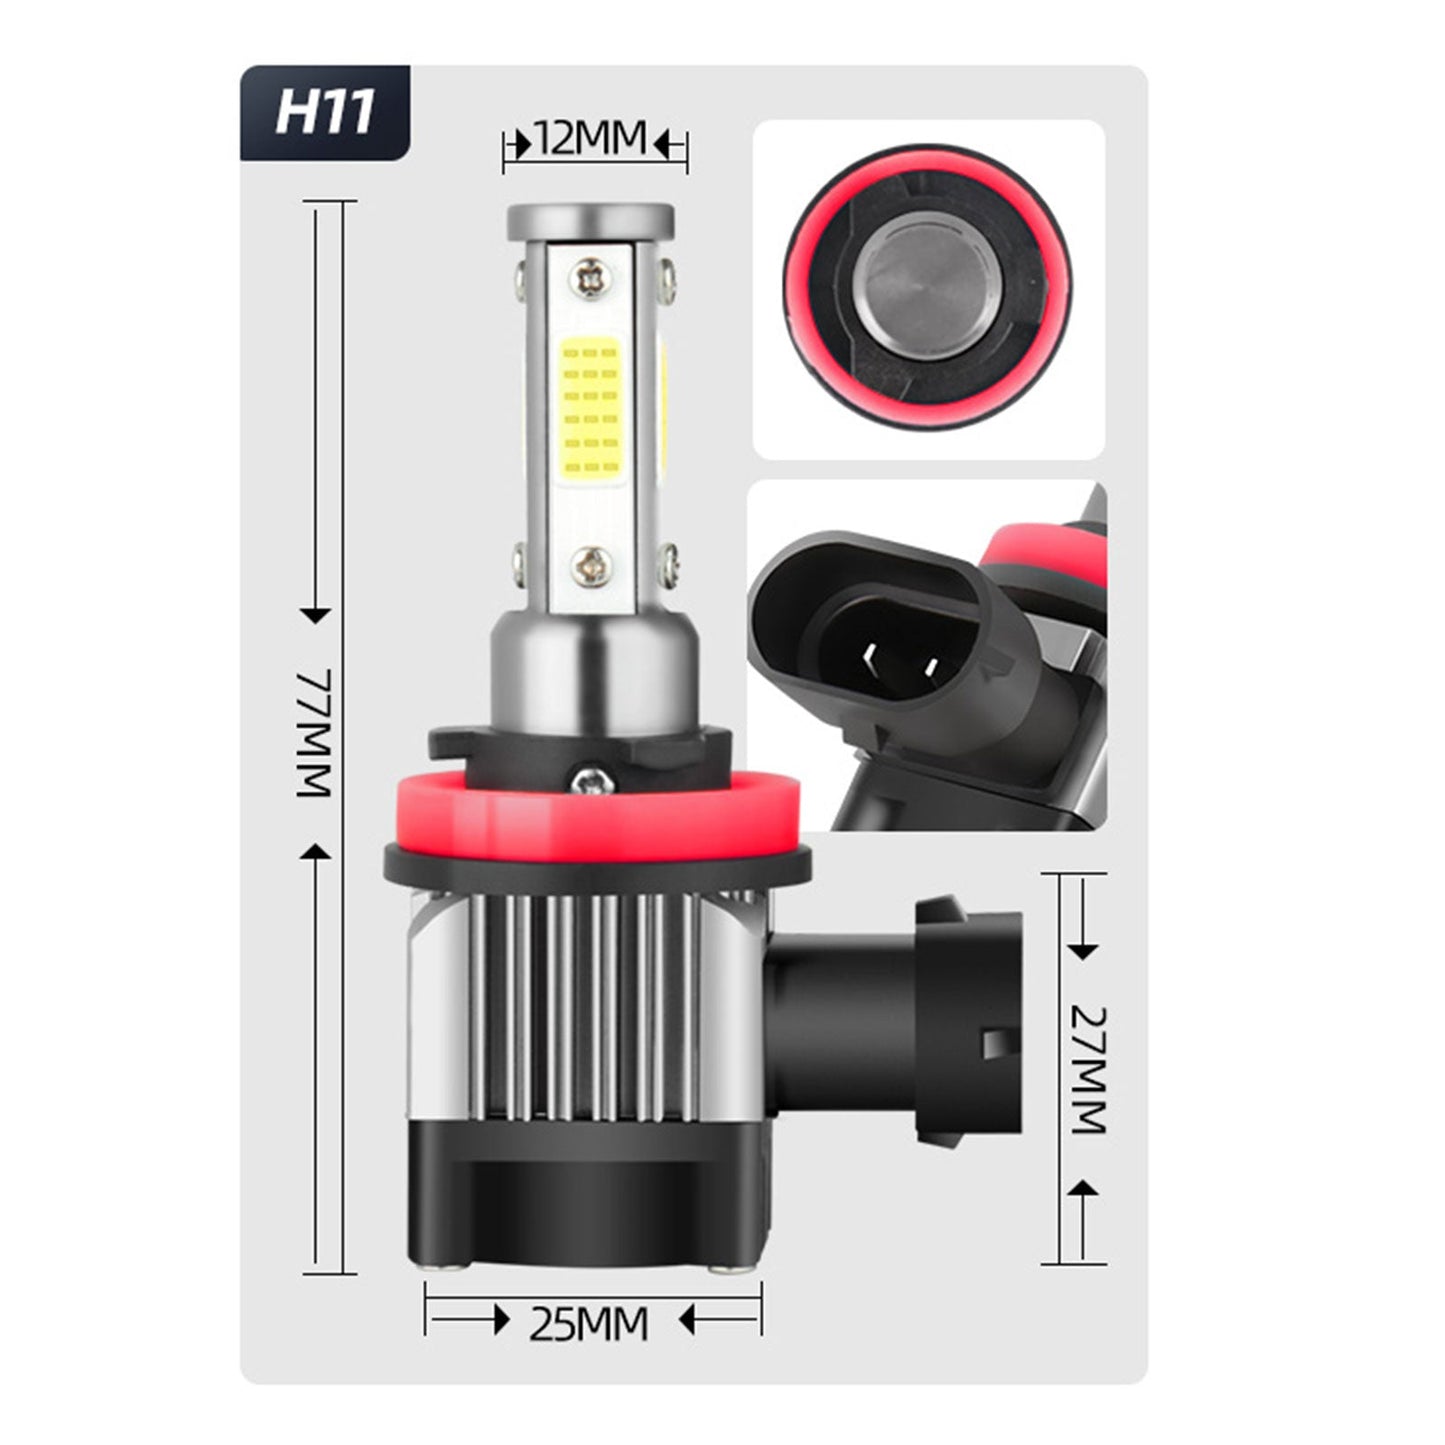 2x H4/HB2/9003 LED Headlight Low Beam Bulbs Conversion High Power 5000LM 25W